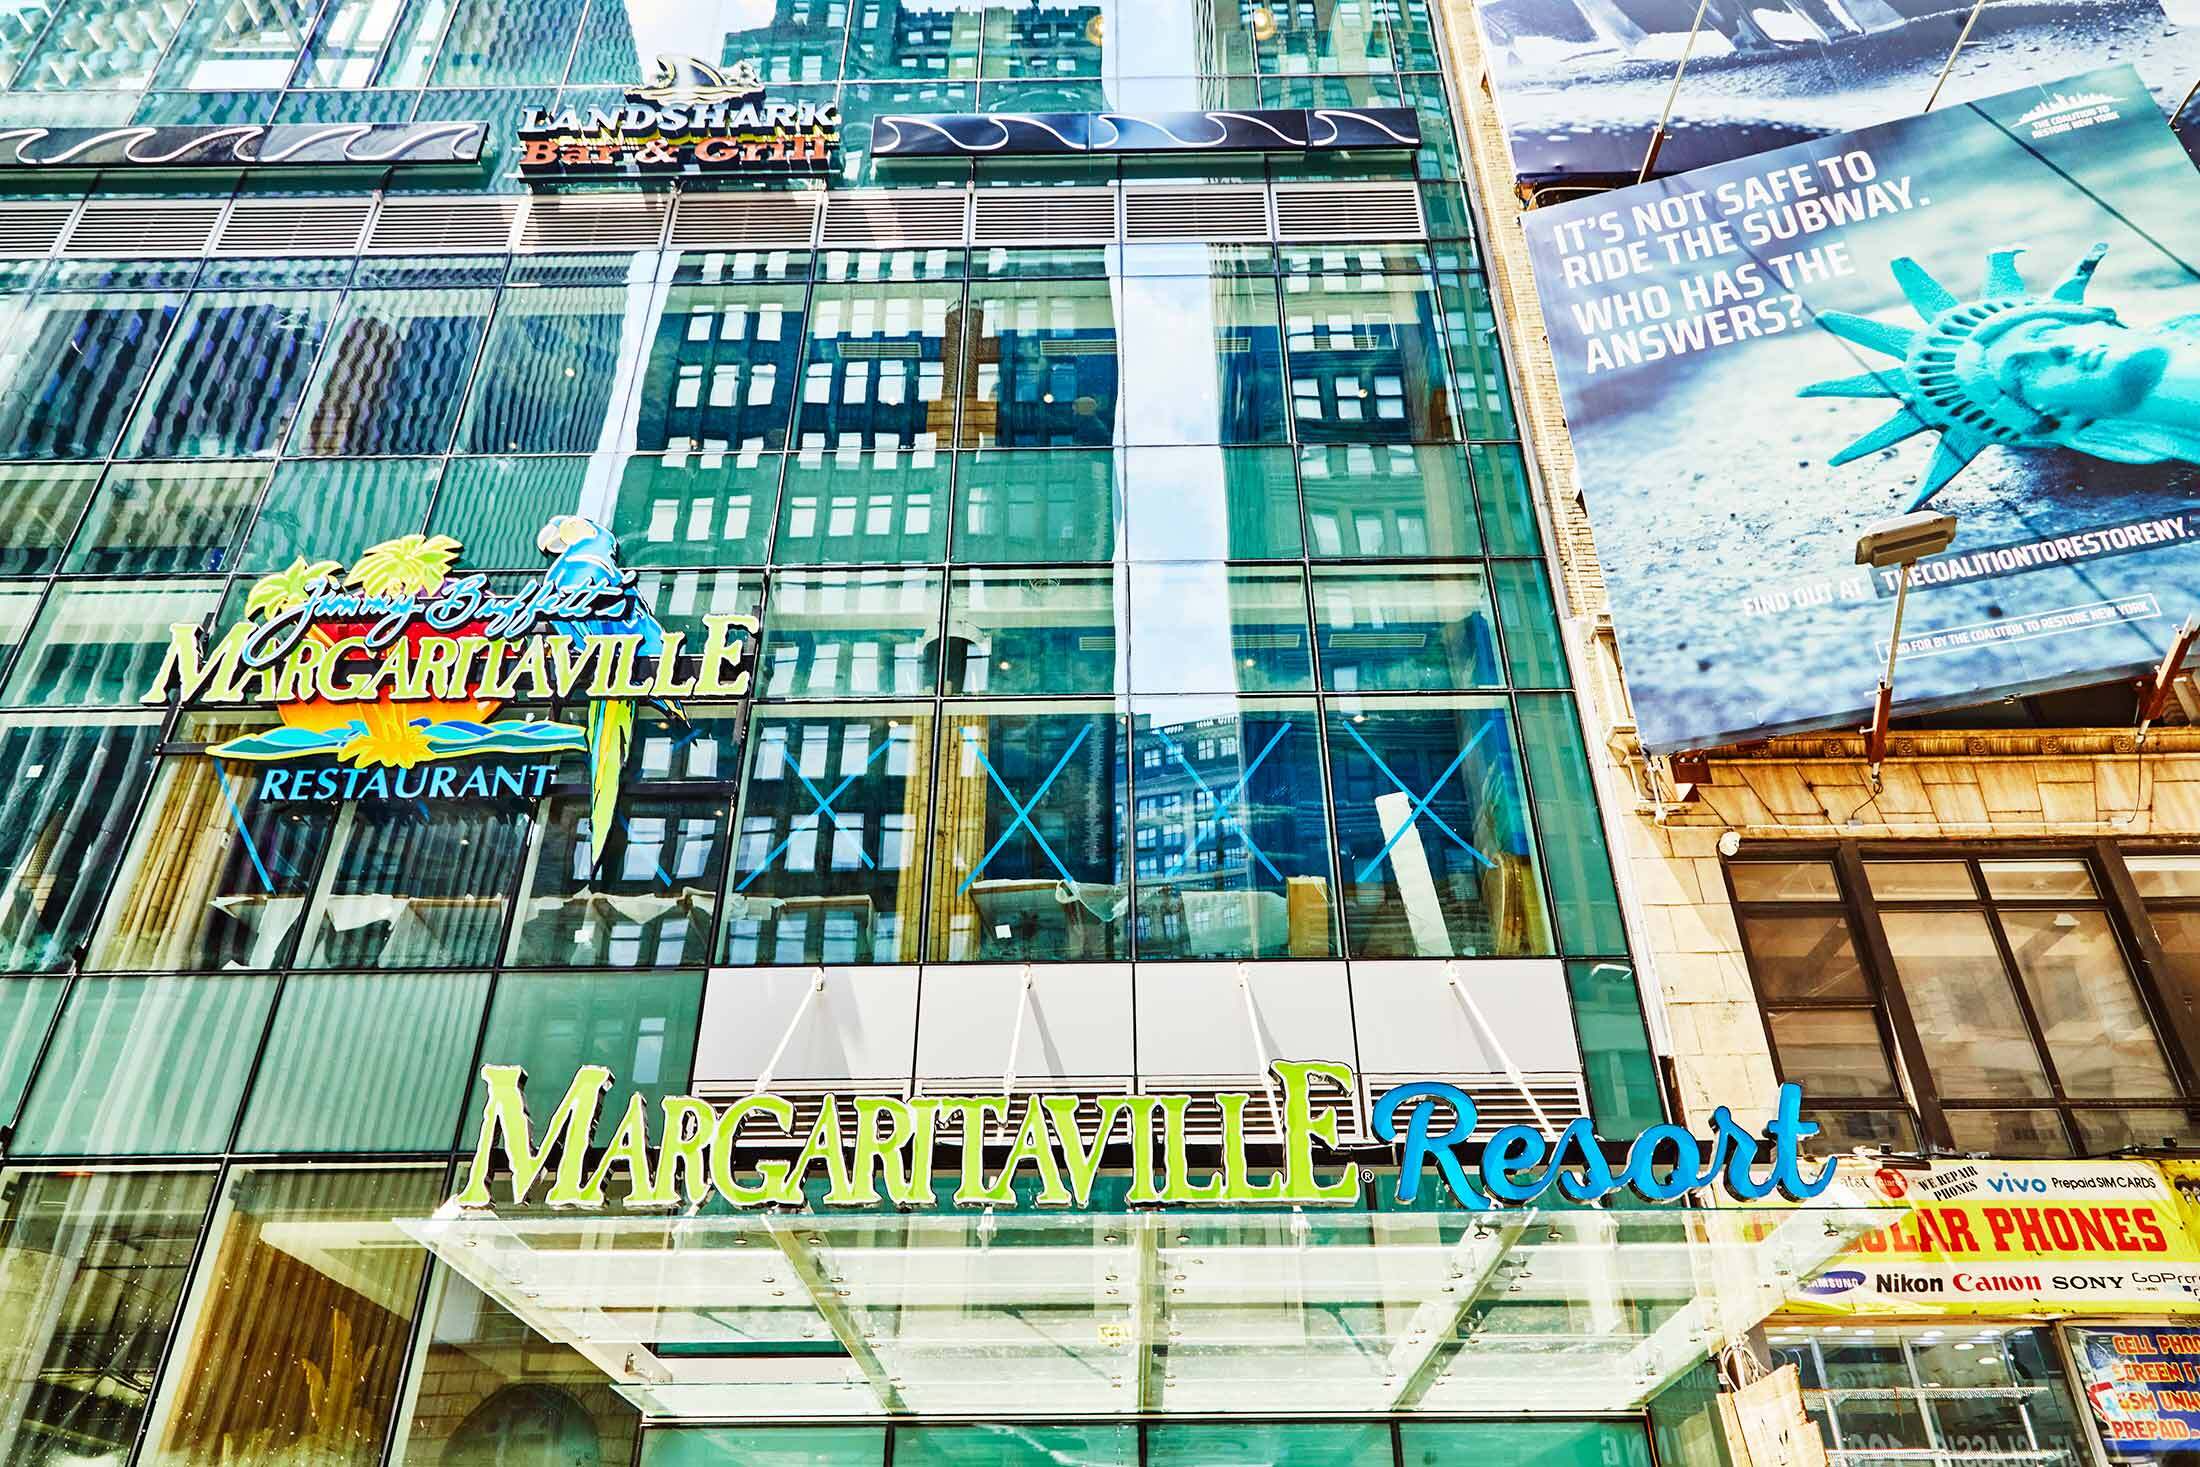 Margaritaville NYC